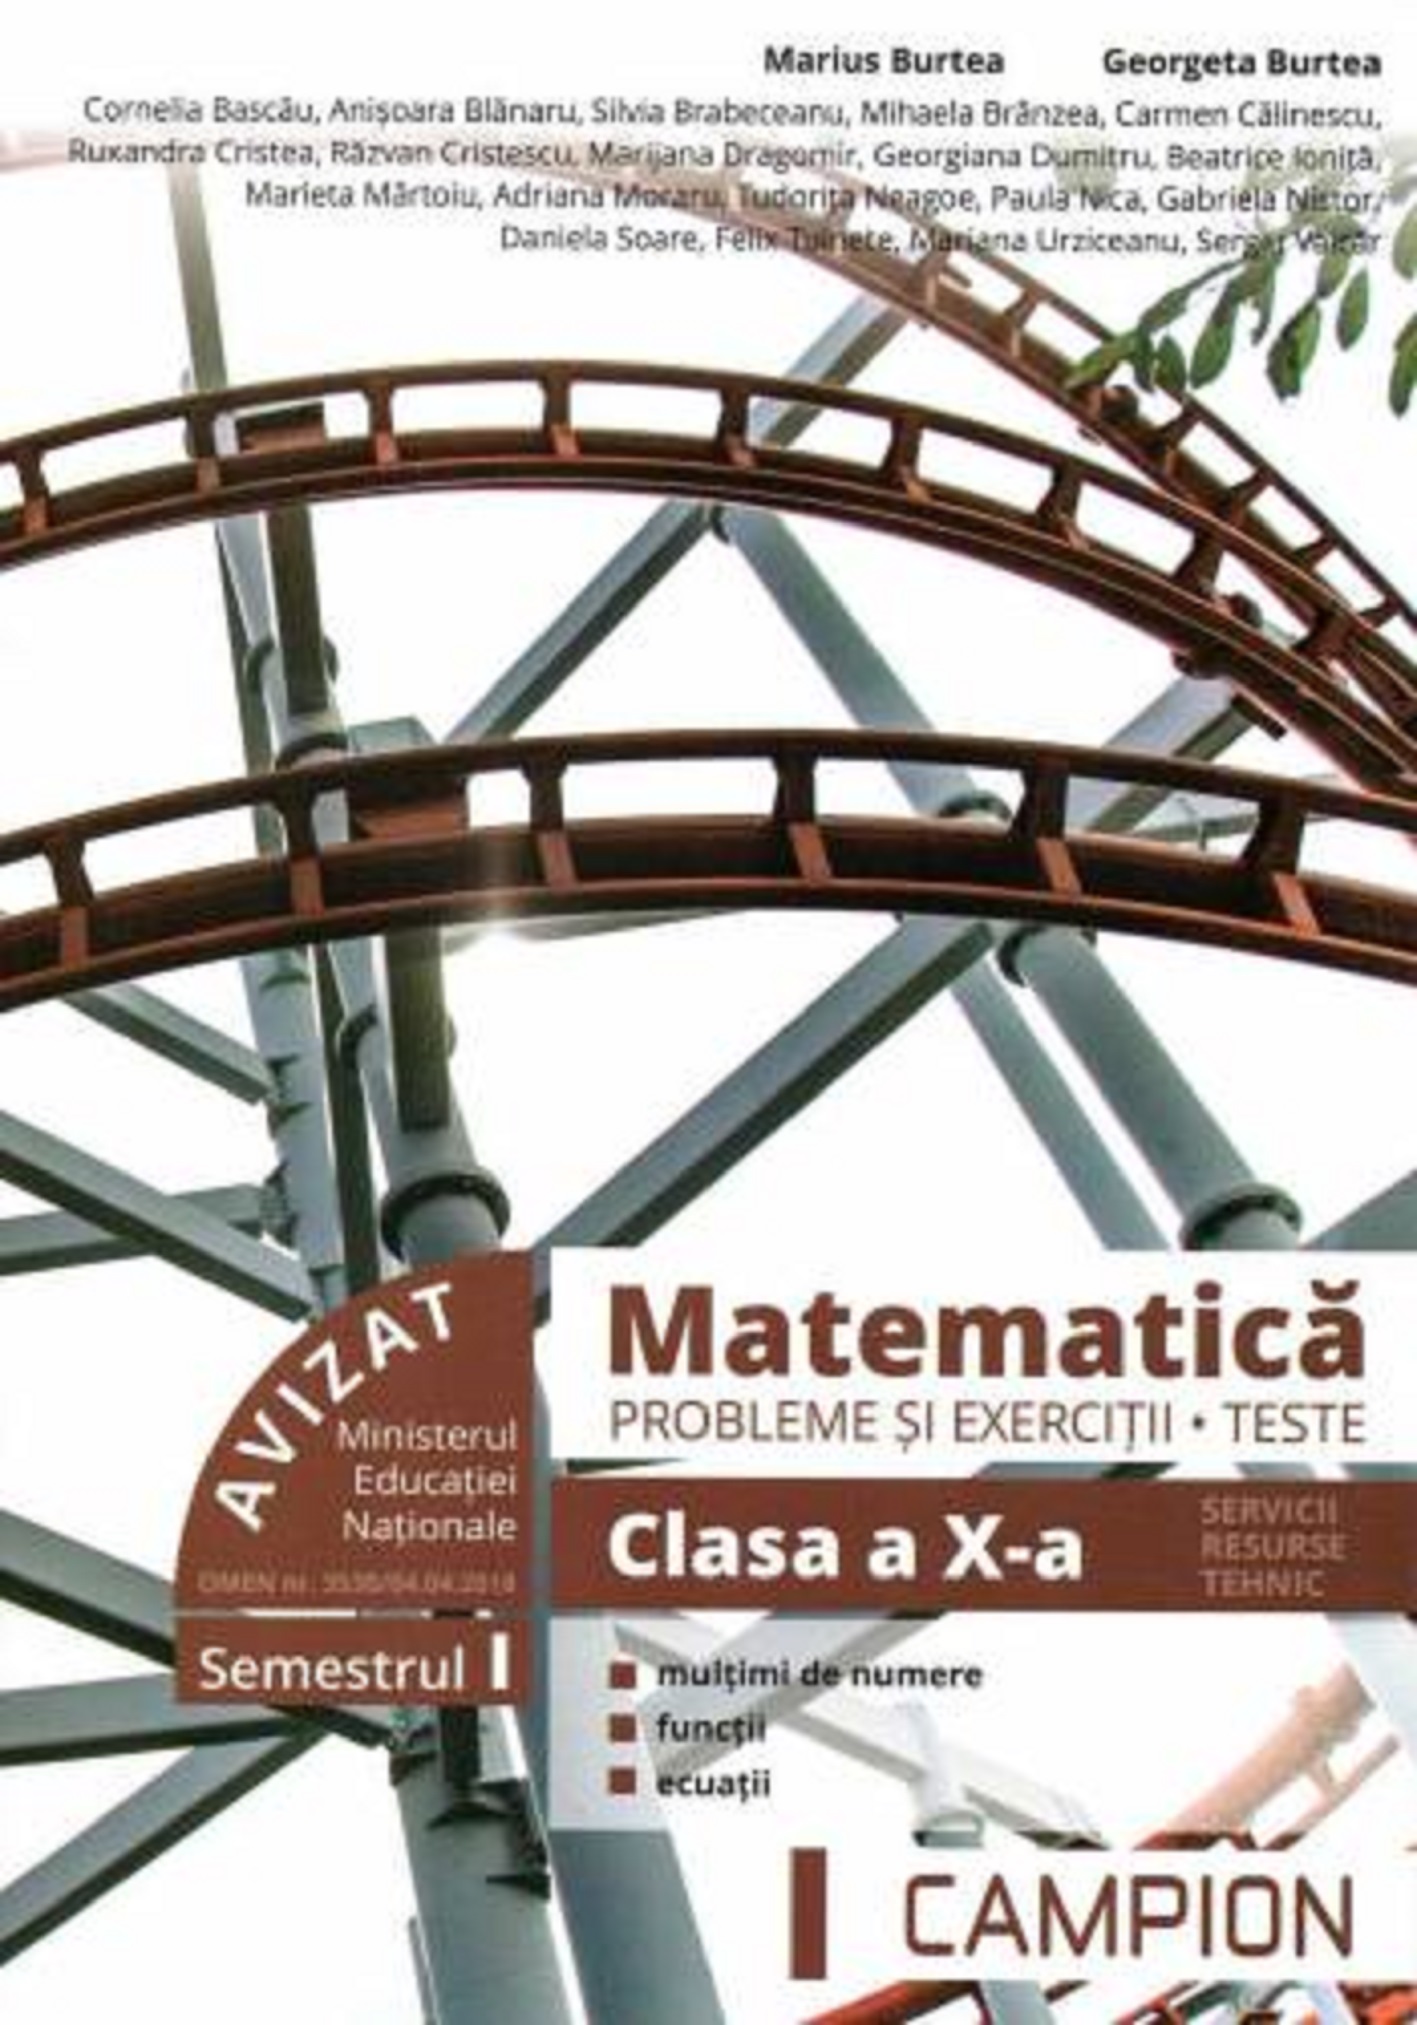 Matematica probleme si exercitii teste clasa a X-a semestrul I. Profil tehnic